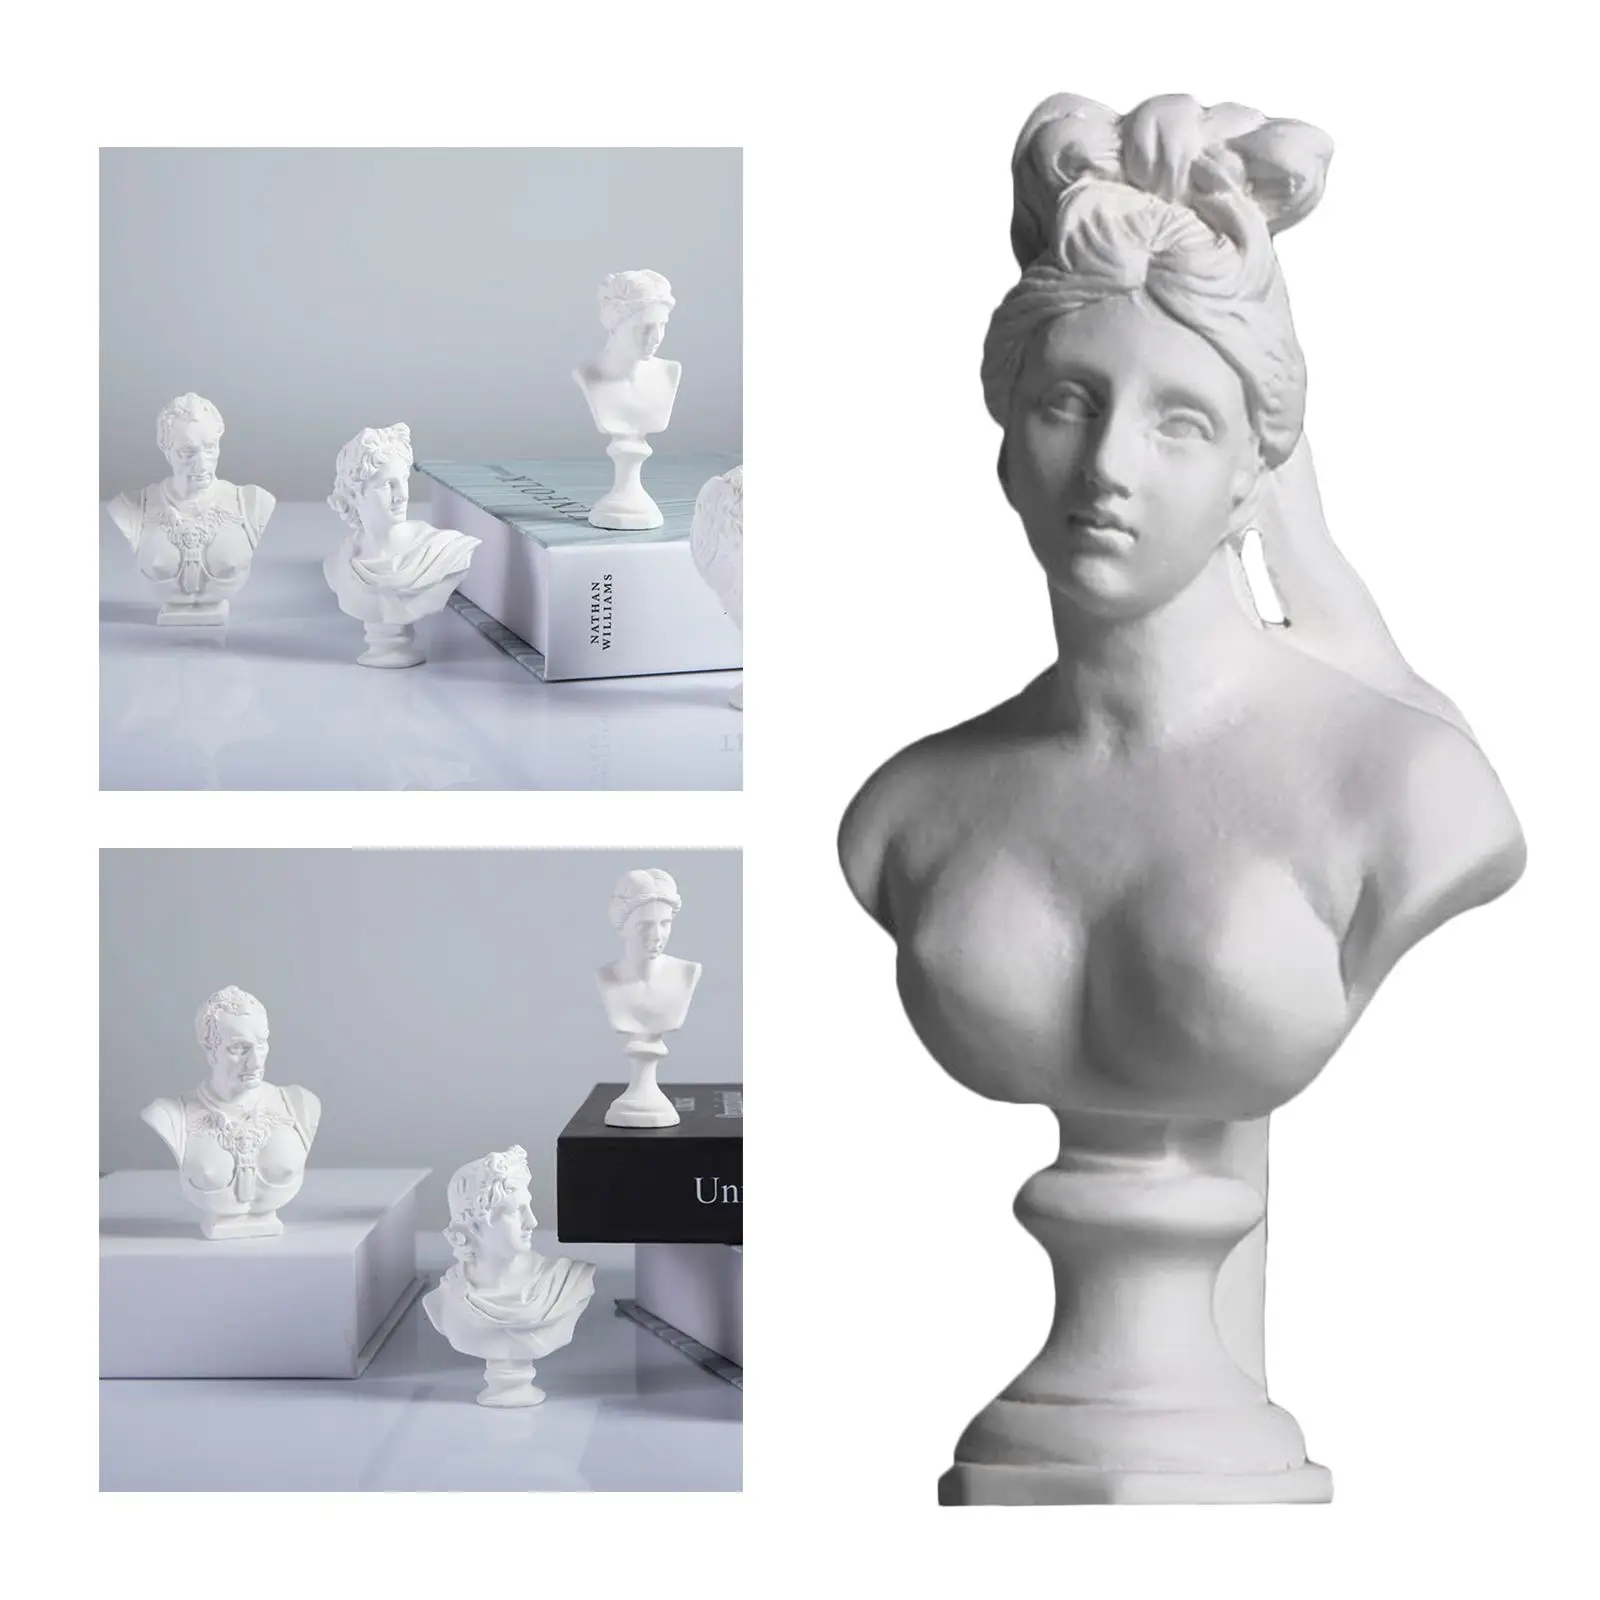 3x 2.4 Inch Classic Resin Greek  Head Bust Statue  Sculpture Figurine for Artist Home Decor Statue